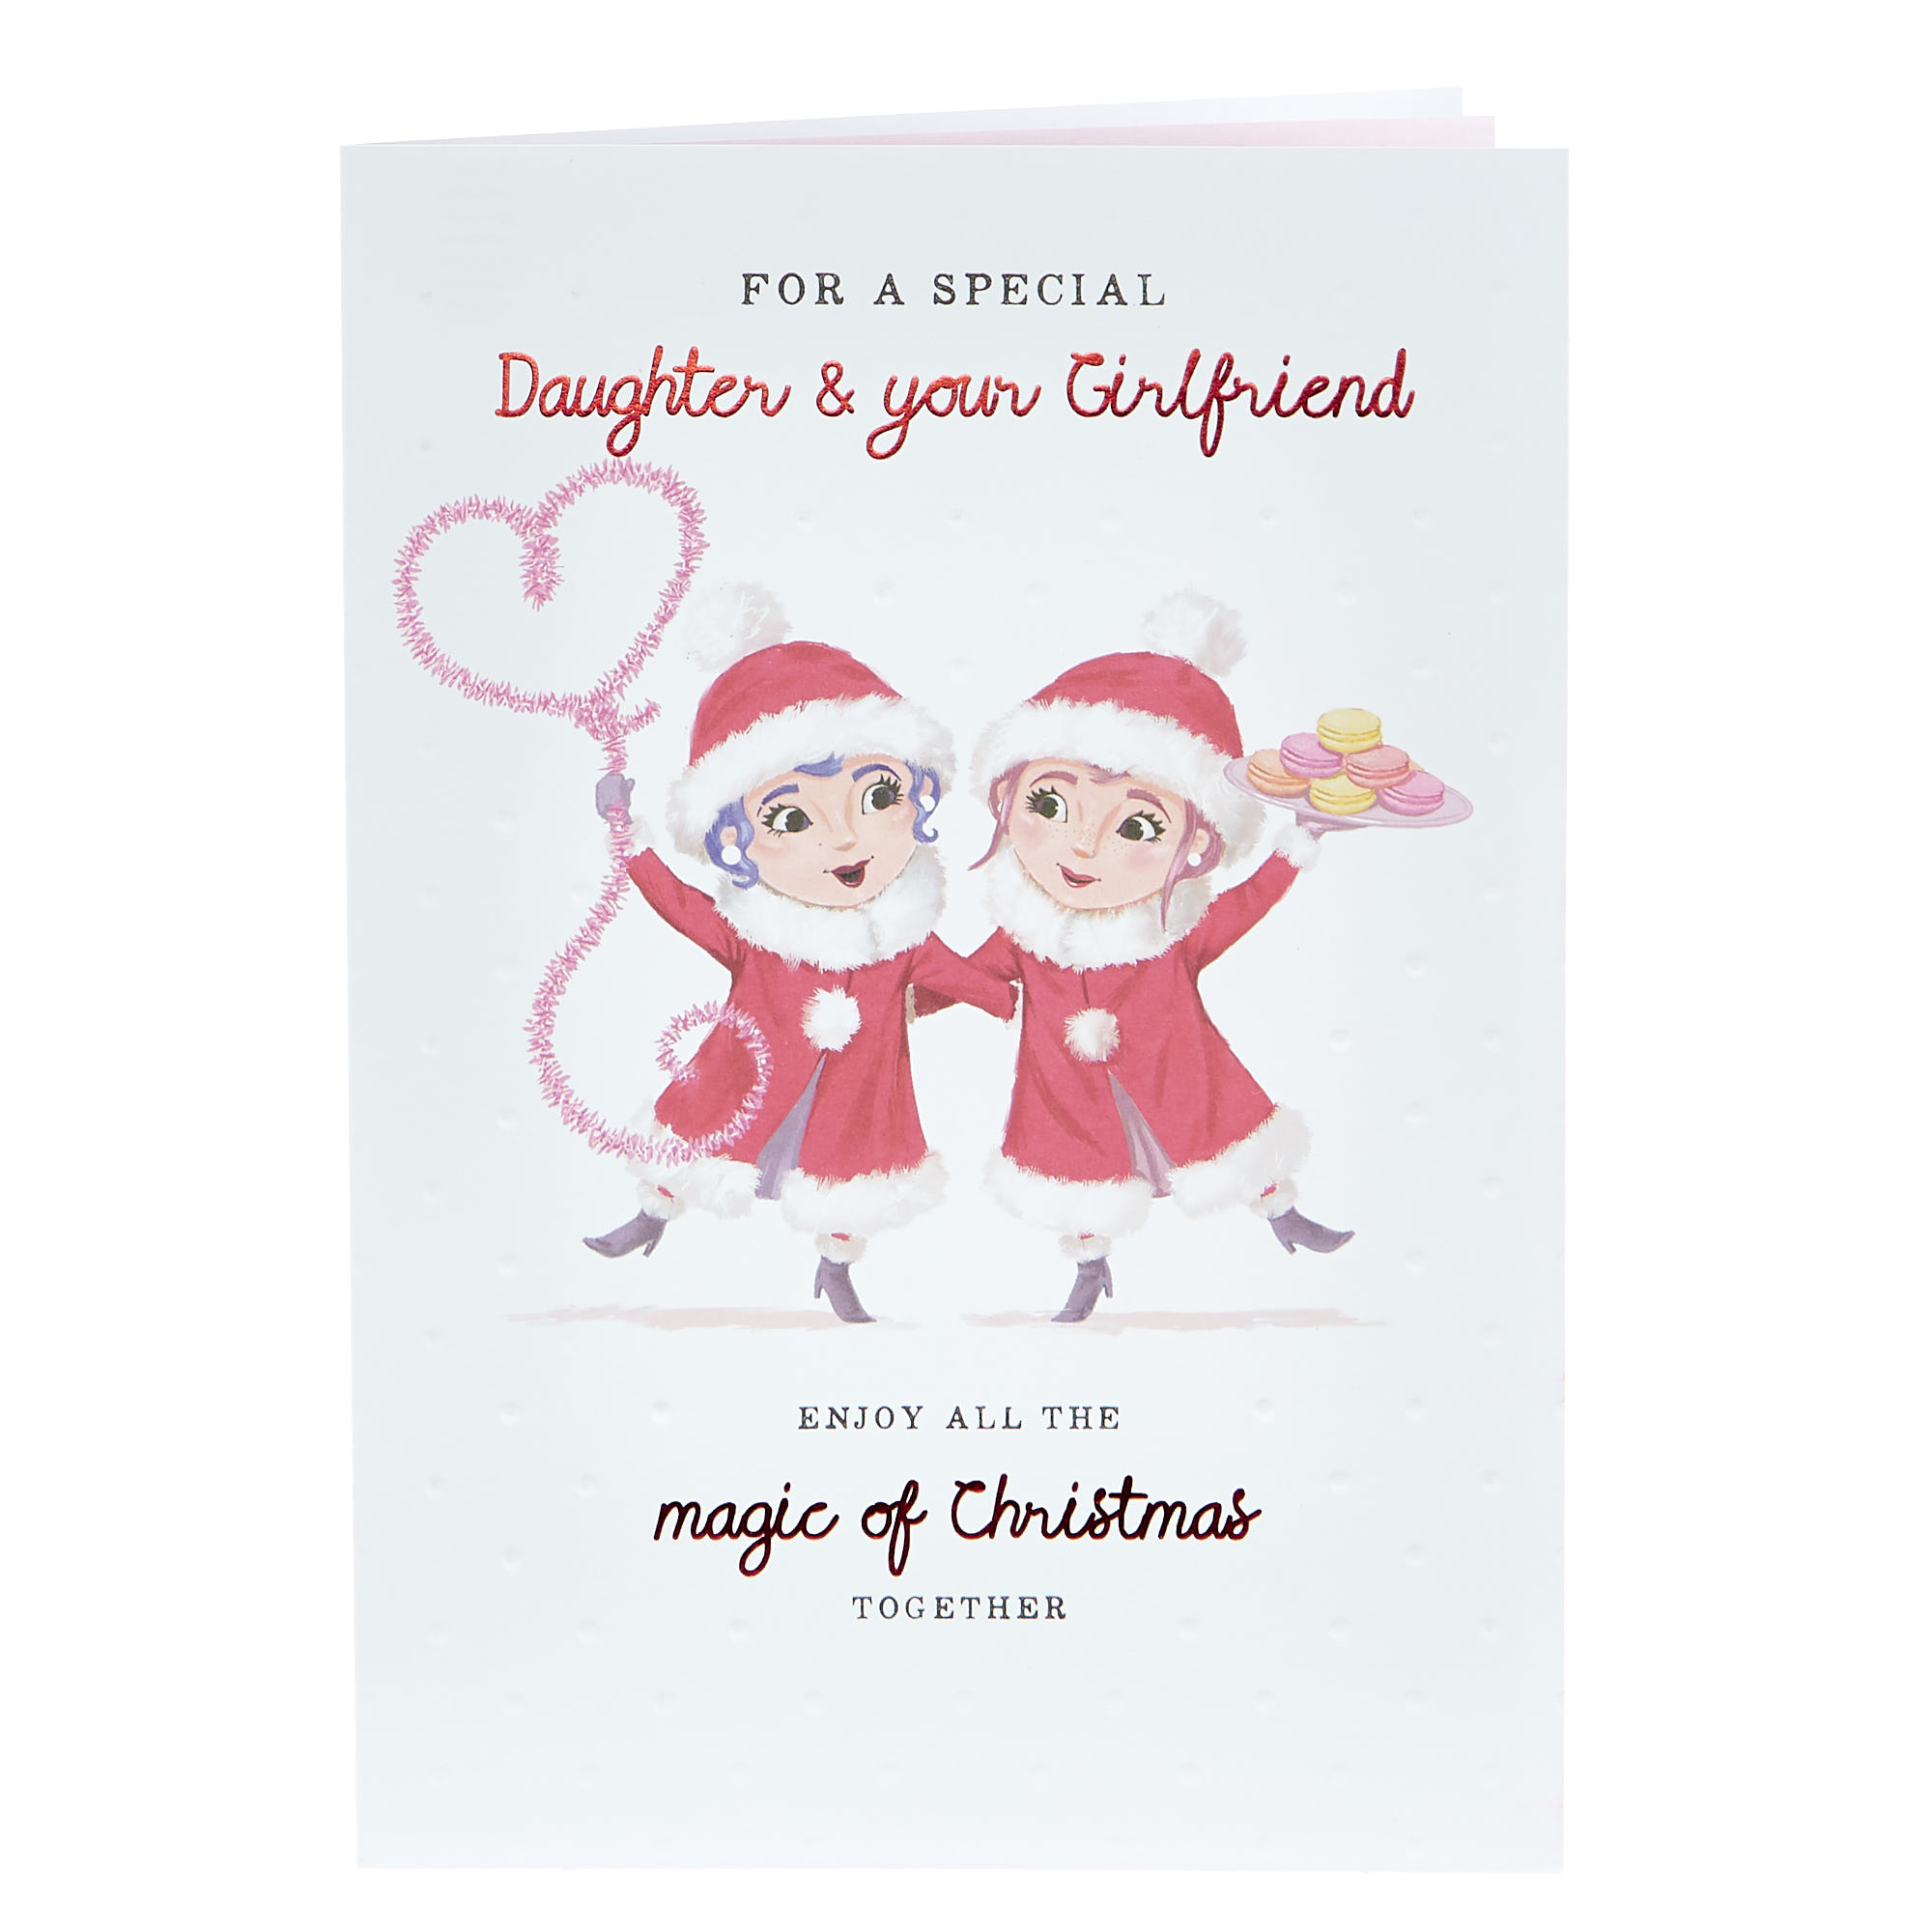 Christmas Card - Daughter & Girlfriend Enjoy The Magic